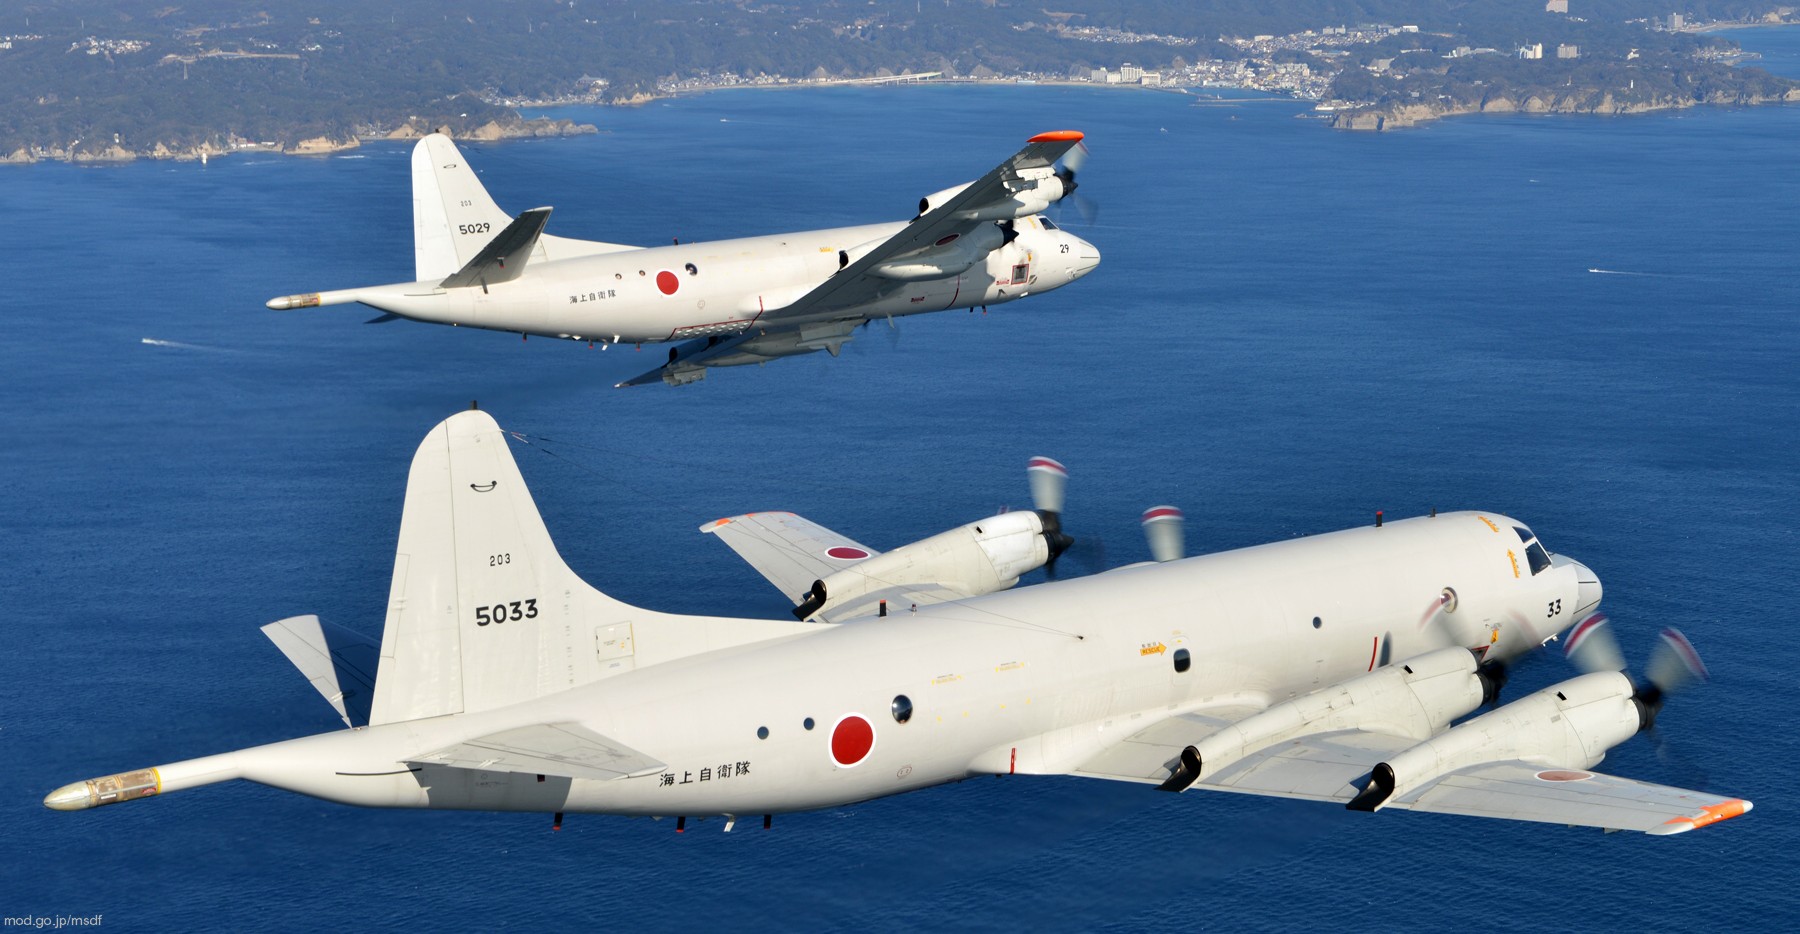 kawasaki p-3c orion patrol aircraft mpa japan maritime self defense force jmsdf iwakuni atsugi air base 02